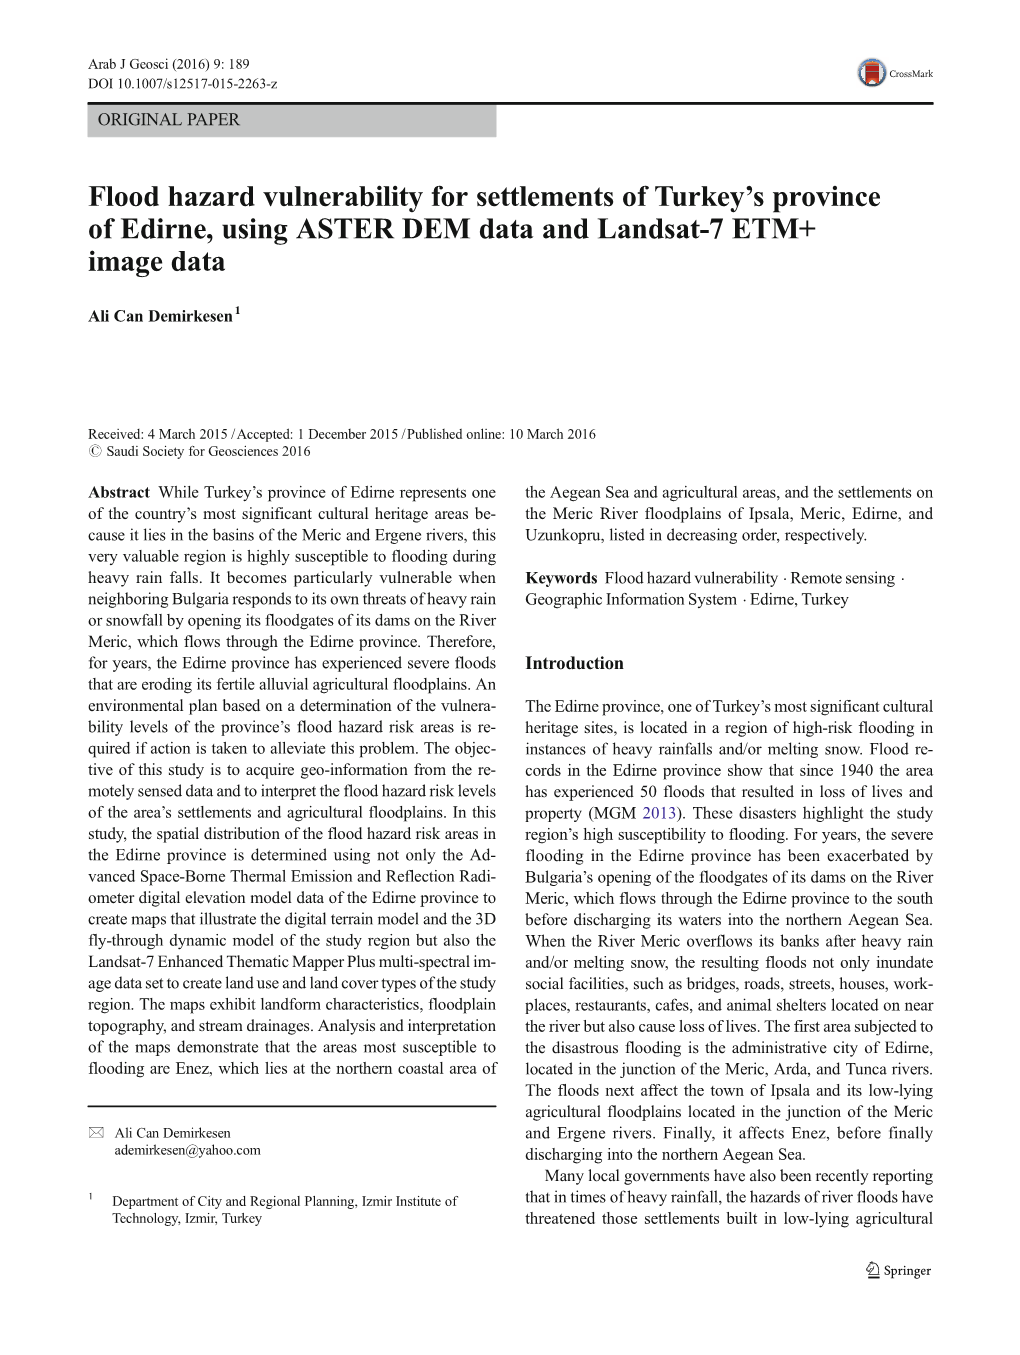 Flood Hazard Vulnerability for Settlements of Turkey's Province of Edirne, Using ASTER DEM Data and Landsat-7 ETM+ Image Data